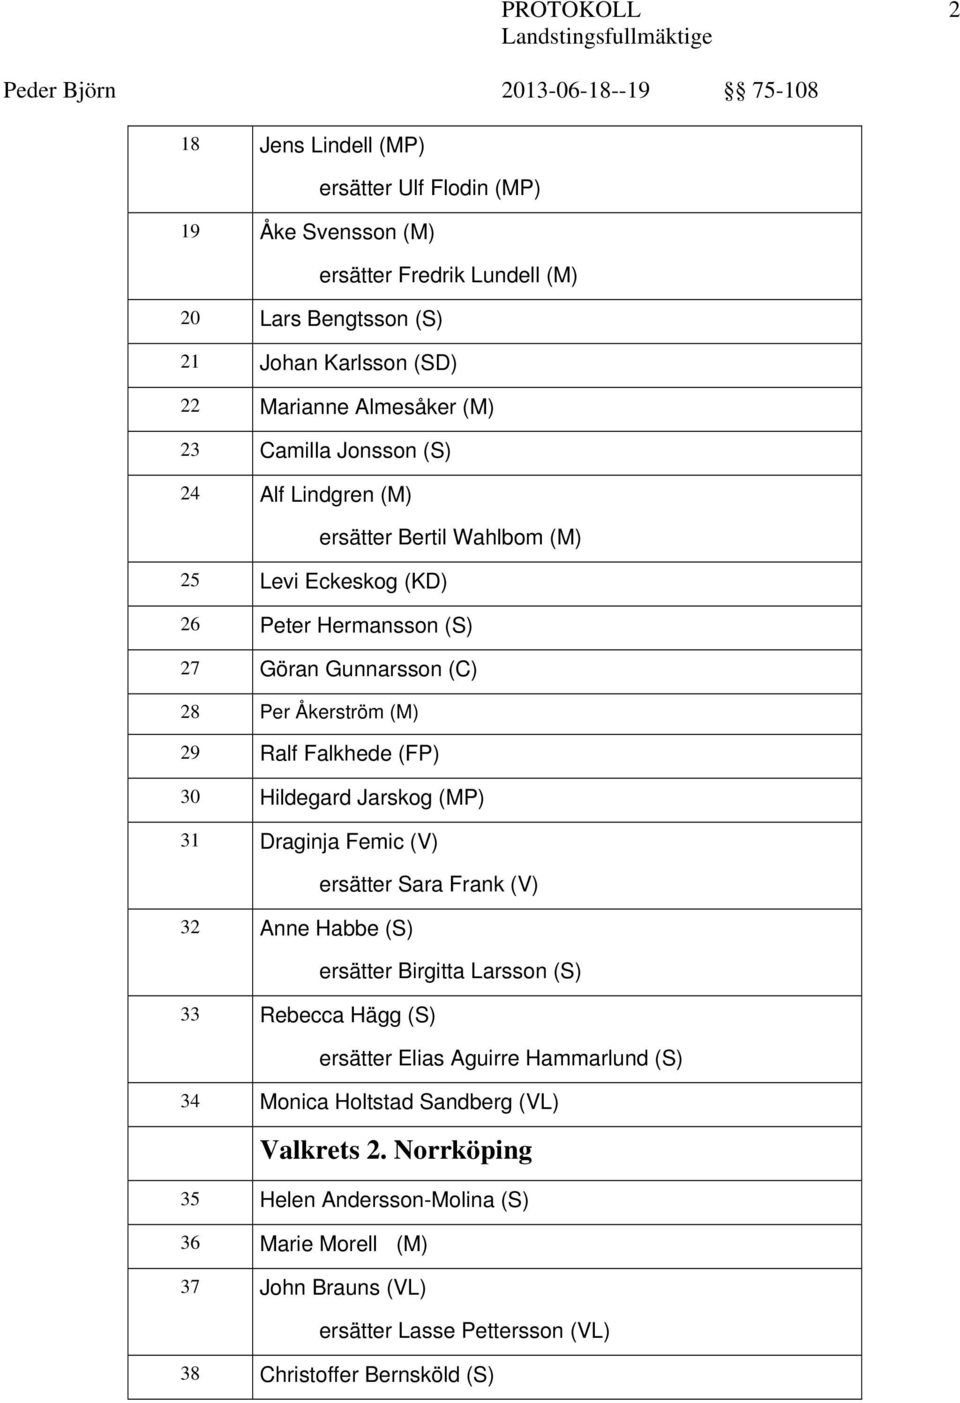 30 Hildegard Jarskog (MP) 31 Draginja Femic (V) 32 Anne Habbe (S) ersätter Sara Frank (V) 33 Rebecca Hägg (S) ersätter Birgitta Larsson (S) ersätter Elias Aguirre Hammarlund (S) 34